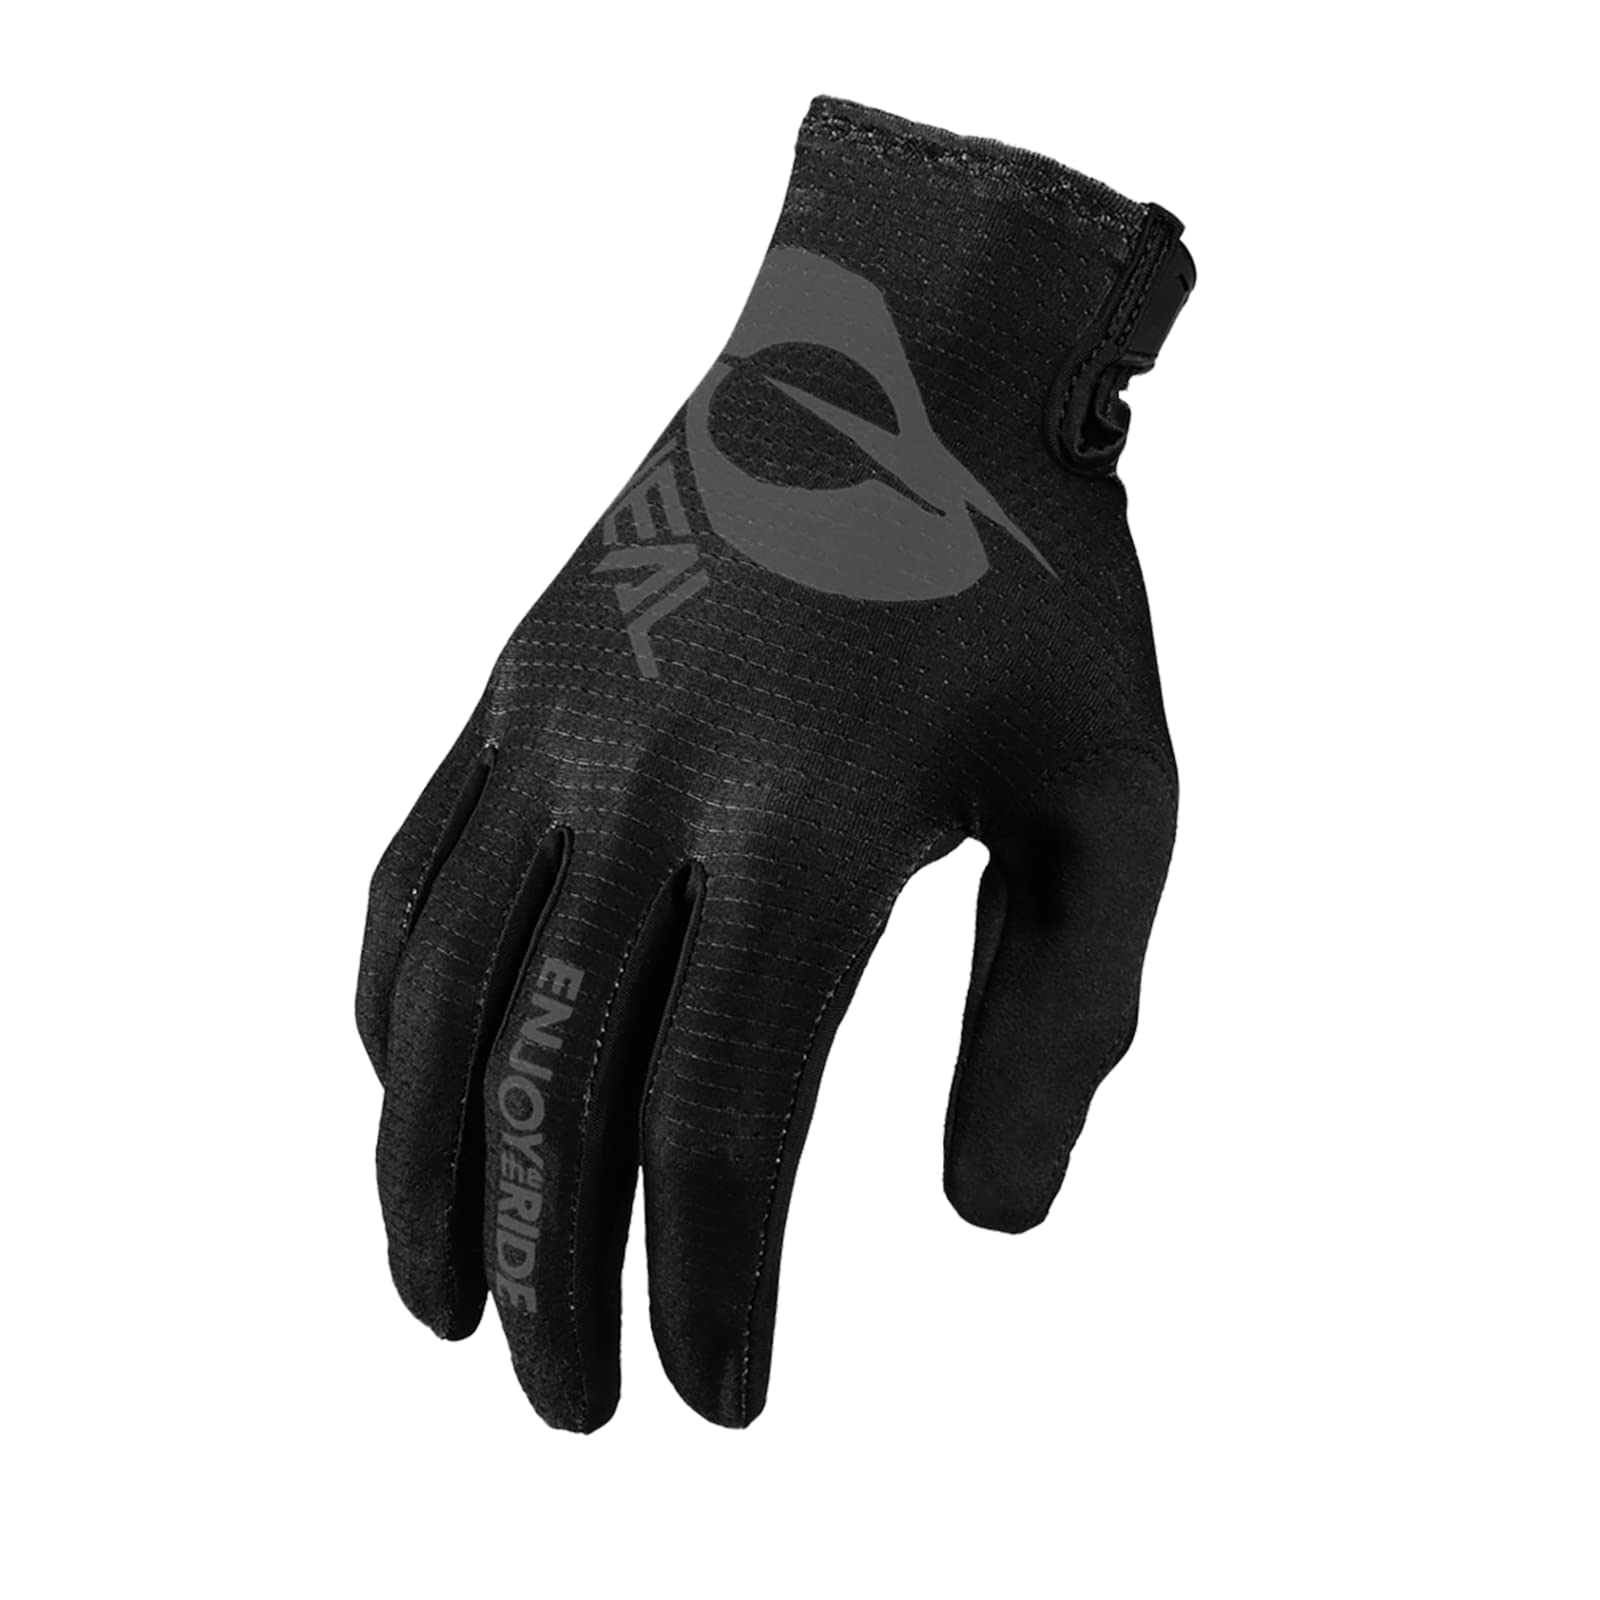 O'NEAL | Fahrrad- & Motocross-Handschuhe | MX MTB DH FR Downhill Freeride | Langlebige, Flexible Materialien, belüftete Handoberseite | Matrix Glove | Erwachsene | Schwarz Grau | Größe L von O'NEAL